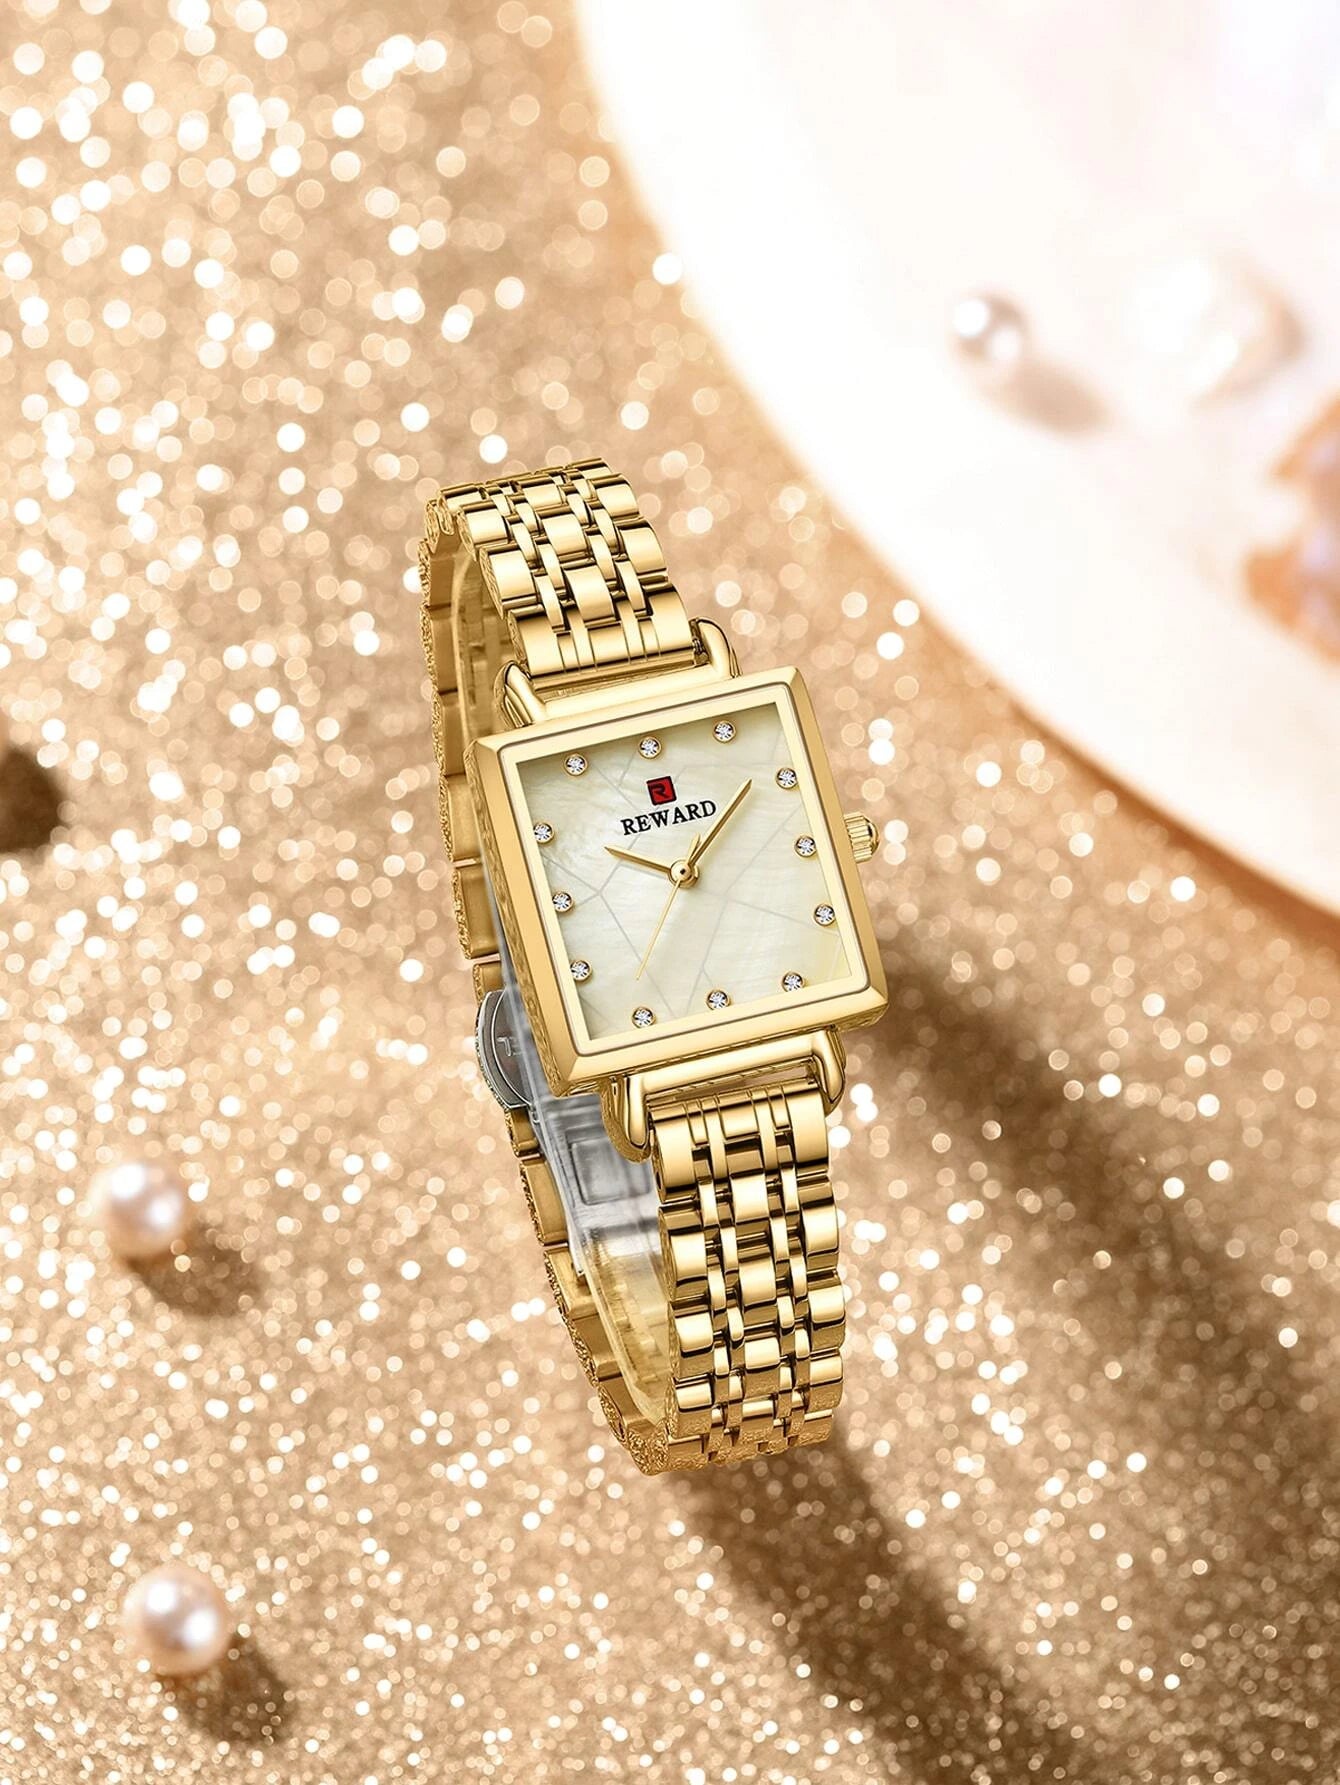 REWARD New Design Quartz Watch for Women Fashion Casual High Quality Wrist Watches Stainless Steel Wristwatch Female